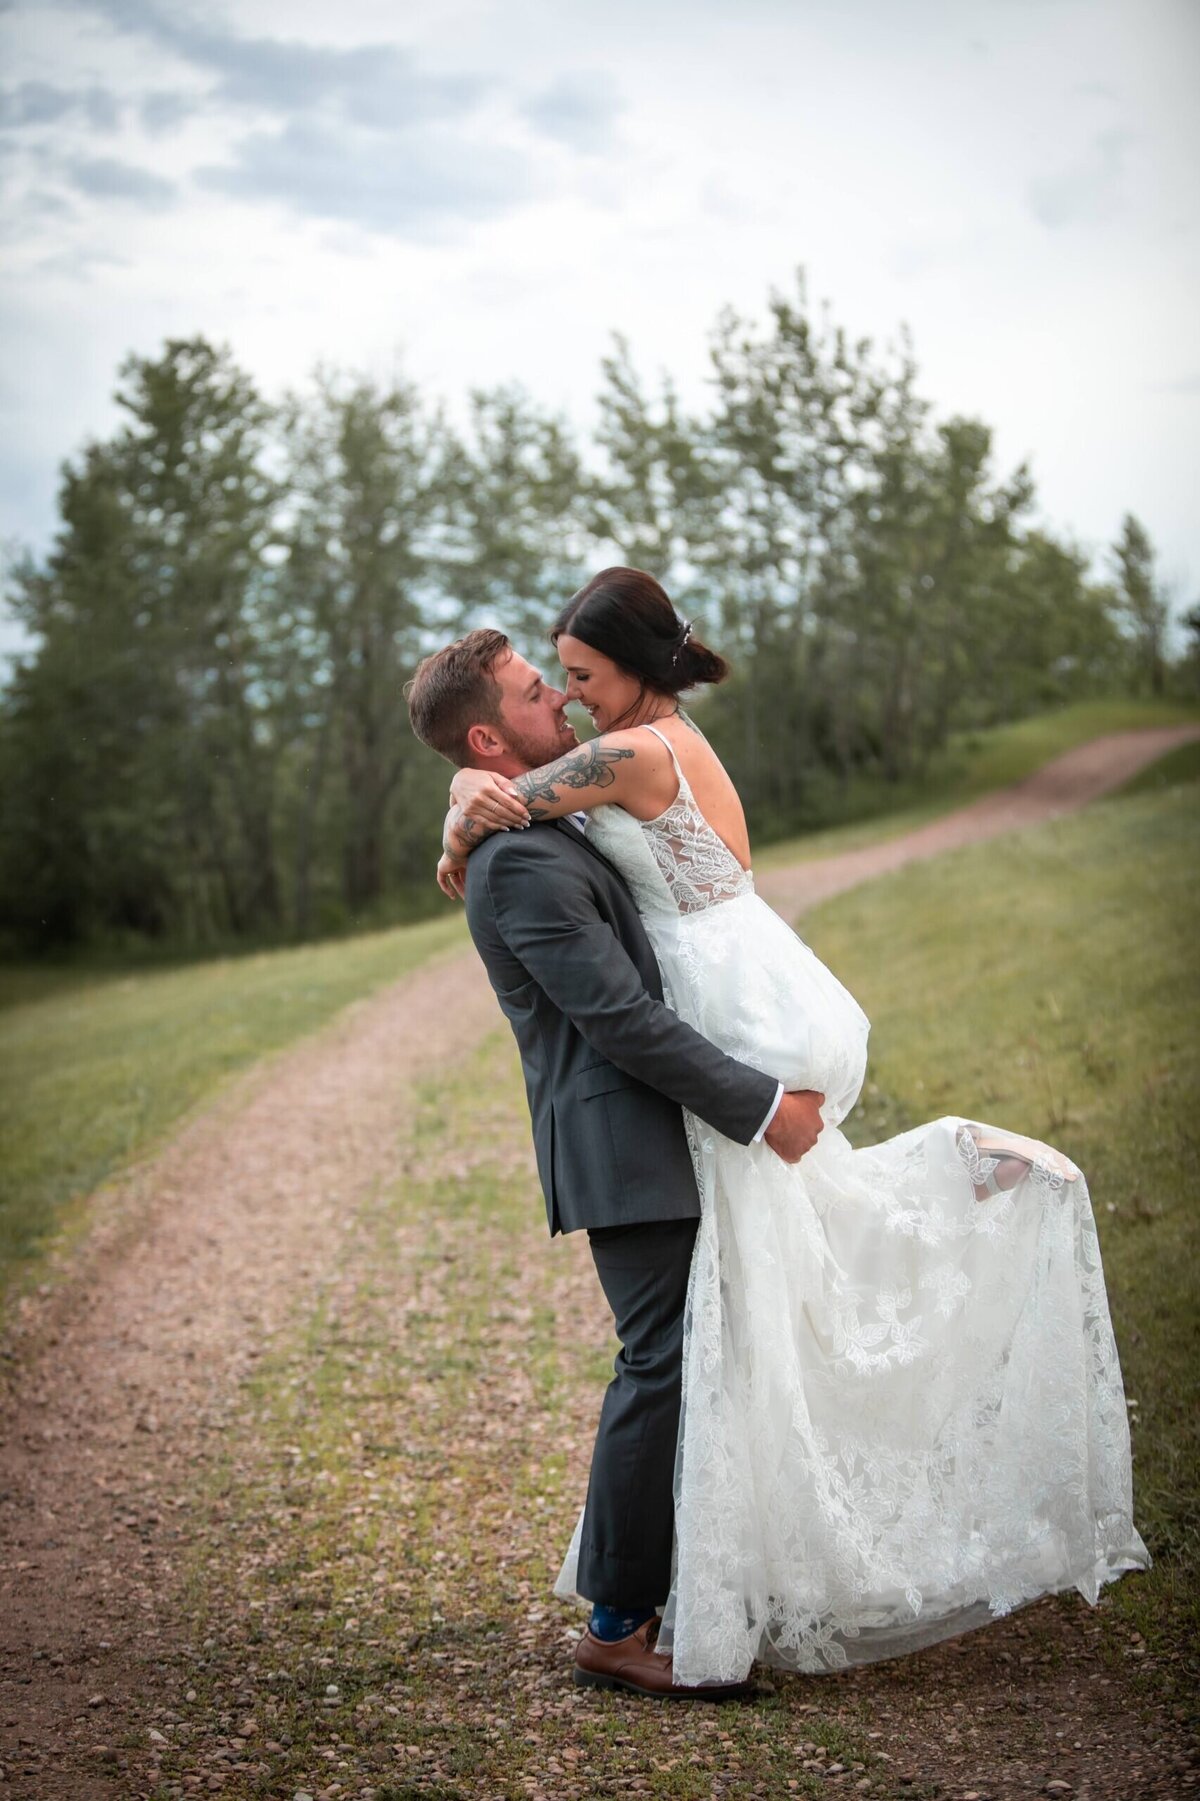 Edmonton's Best Wedding Photography